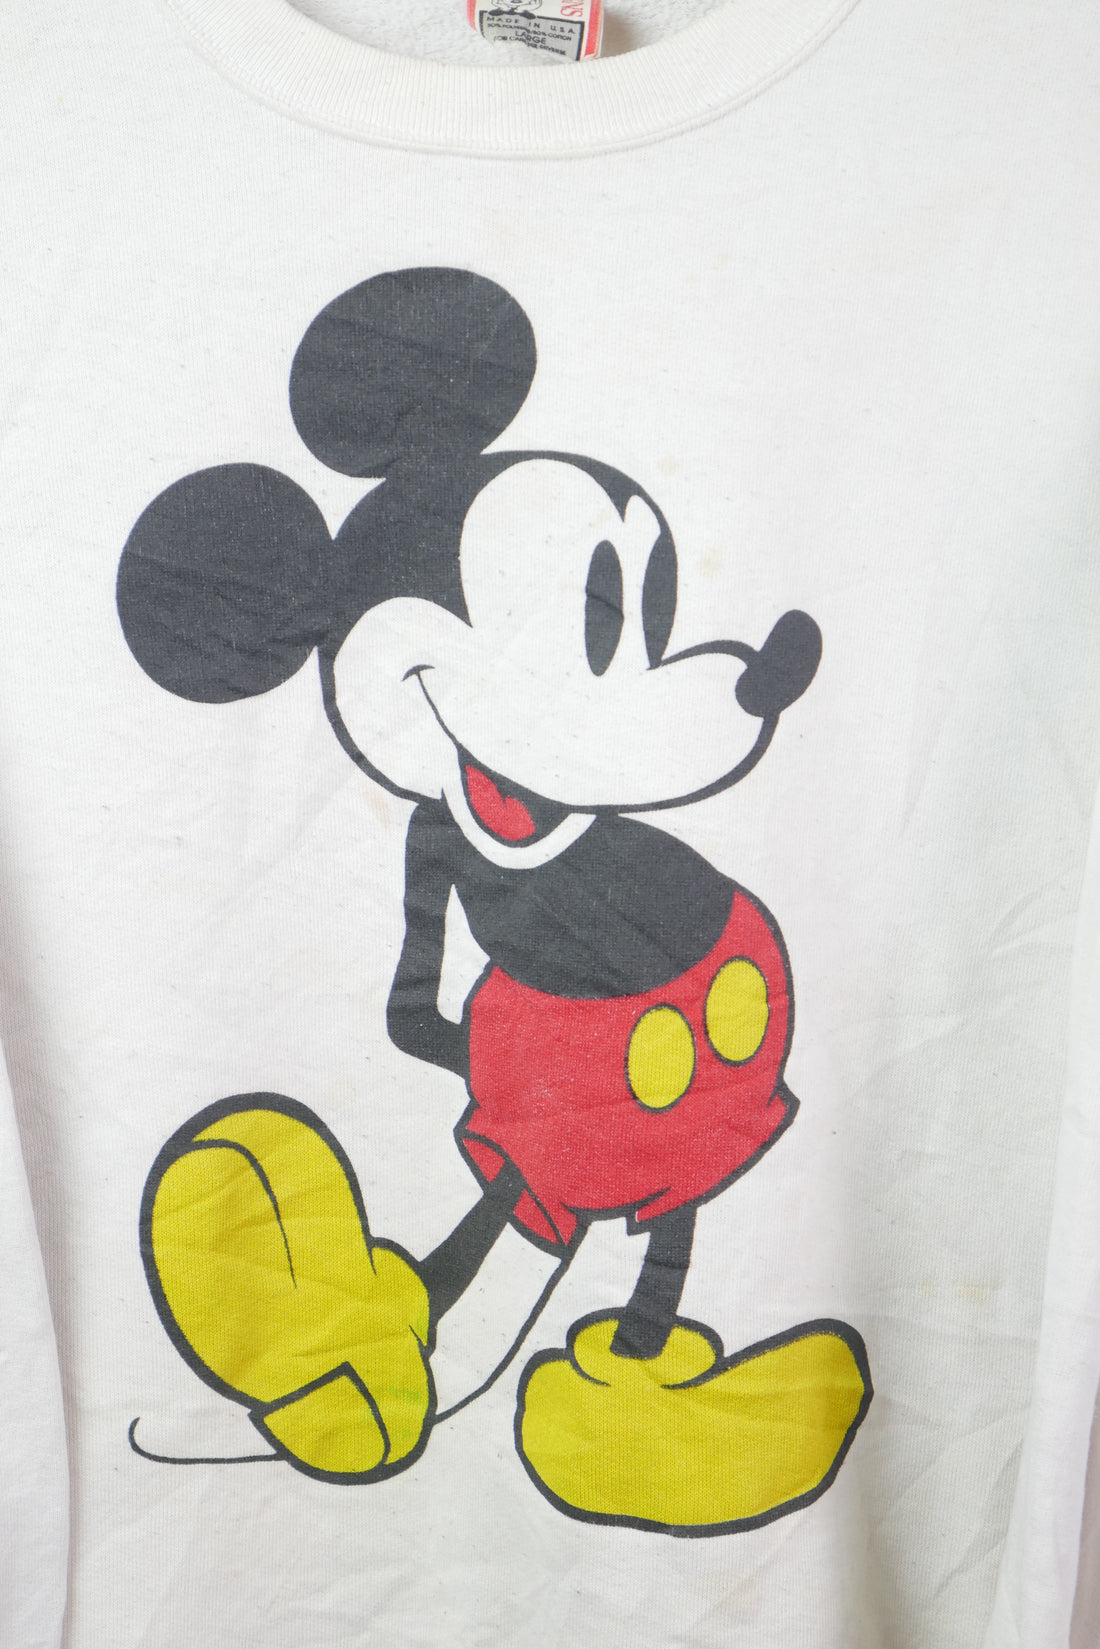 The Disney Graphic Sweatshirt (L)